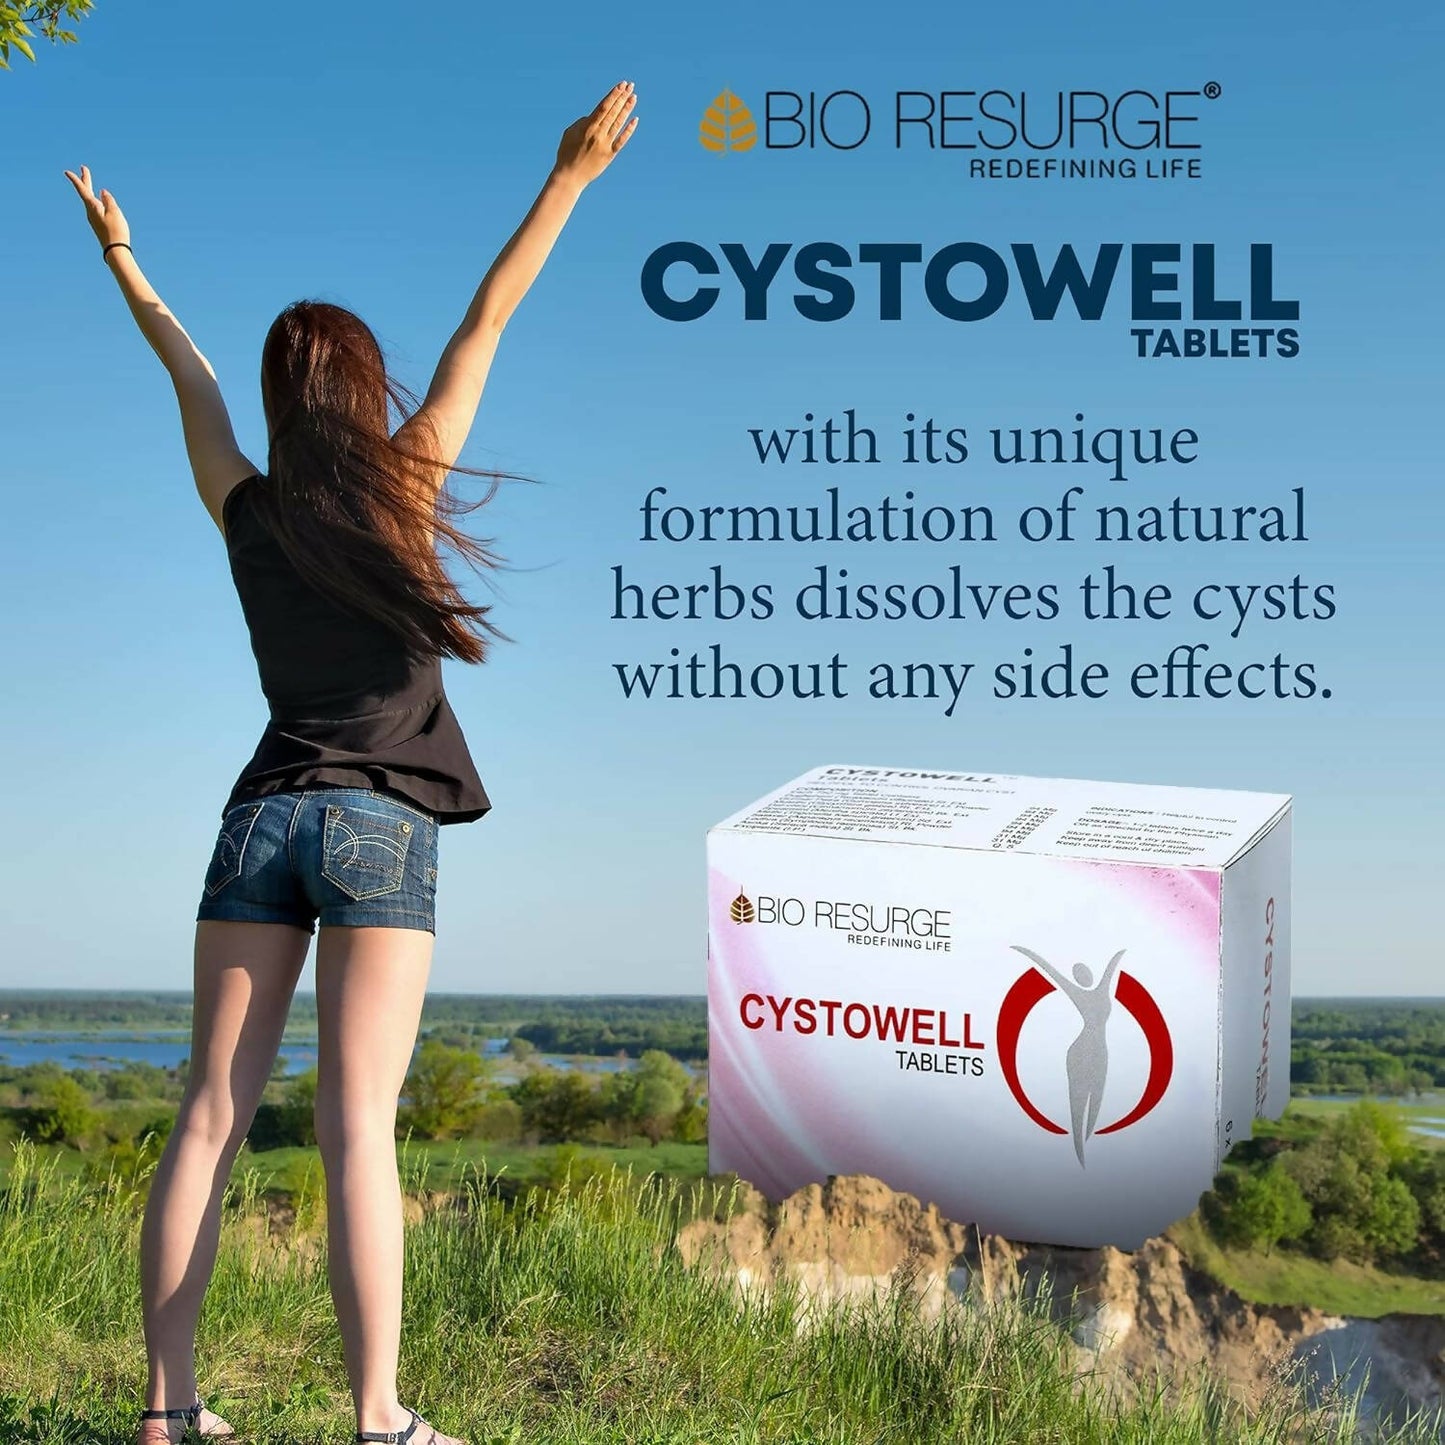 Bio Resurge Life Cystowell Tablets